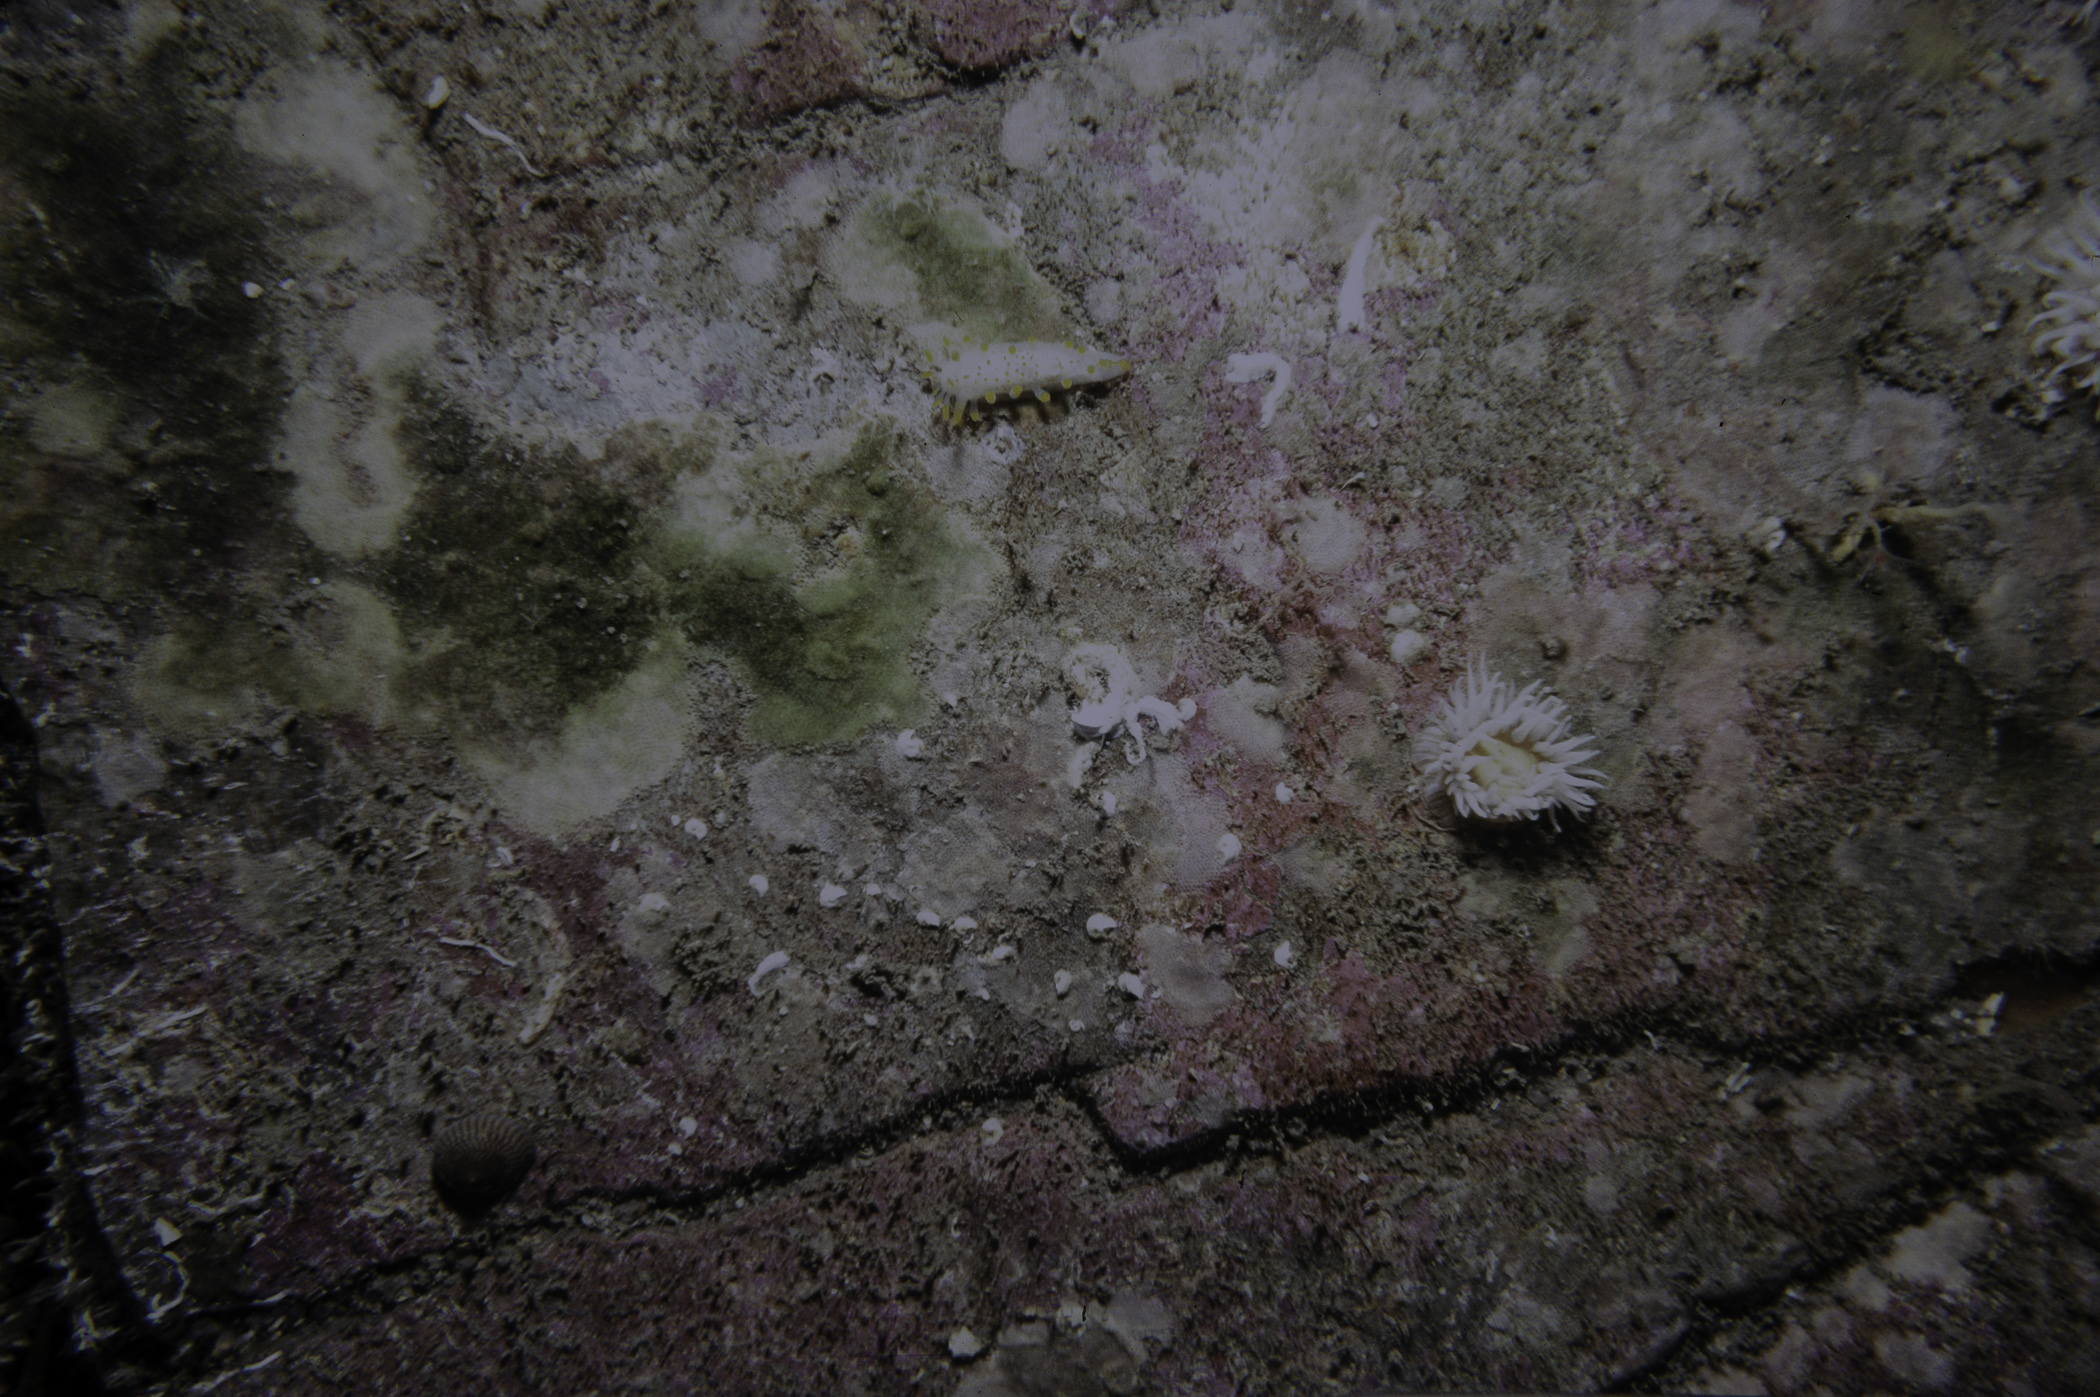 Actinothoe sphyrodeta, Limacia clavigera. Site: Ballyhenry Island, Strangford Lough. 